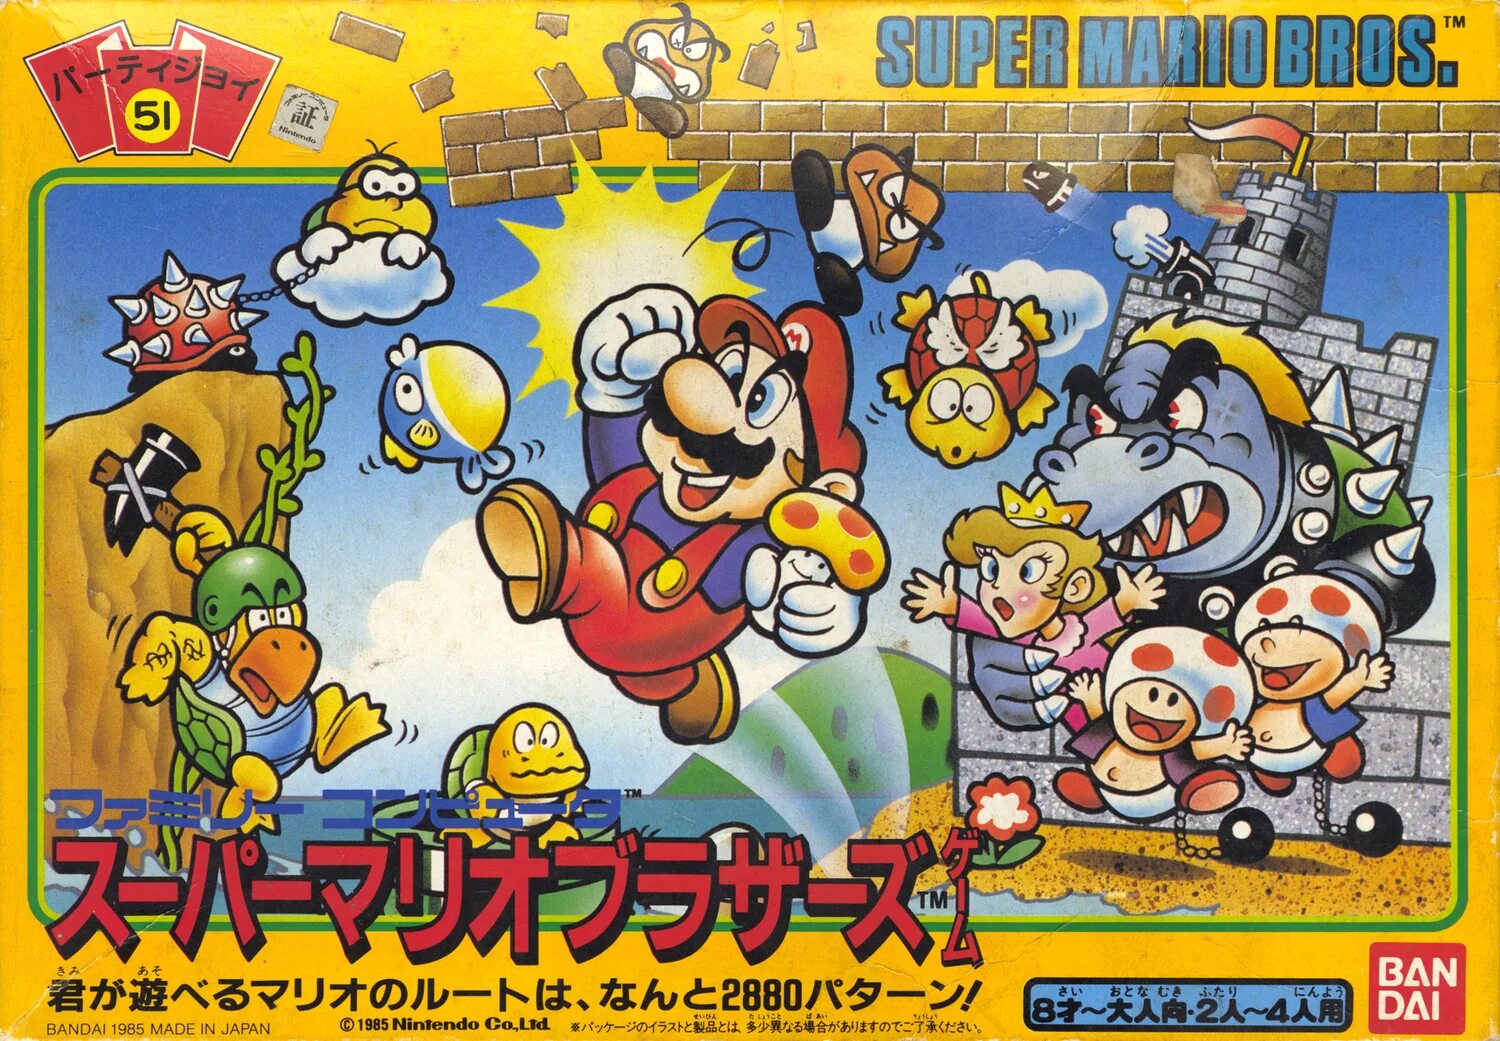 Mario bros snes. Super Mario Bros 1985 NES. Super Mario Bros NES обложка. Super Mario Bros 1985 Nintendo. Super Mario brothers 1985.